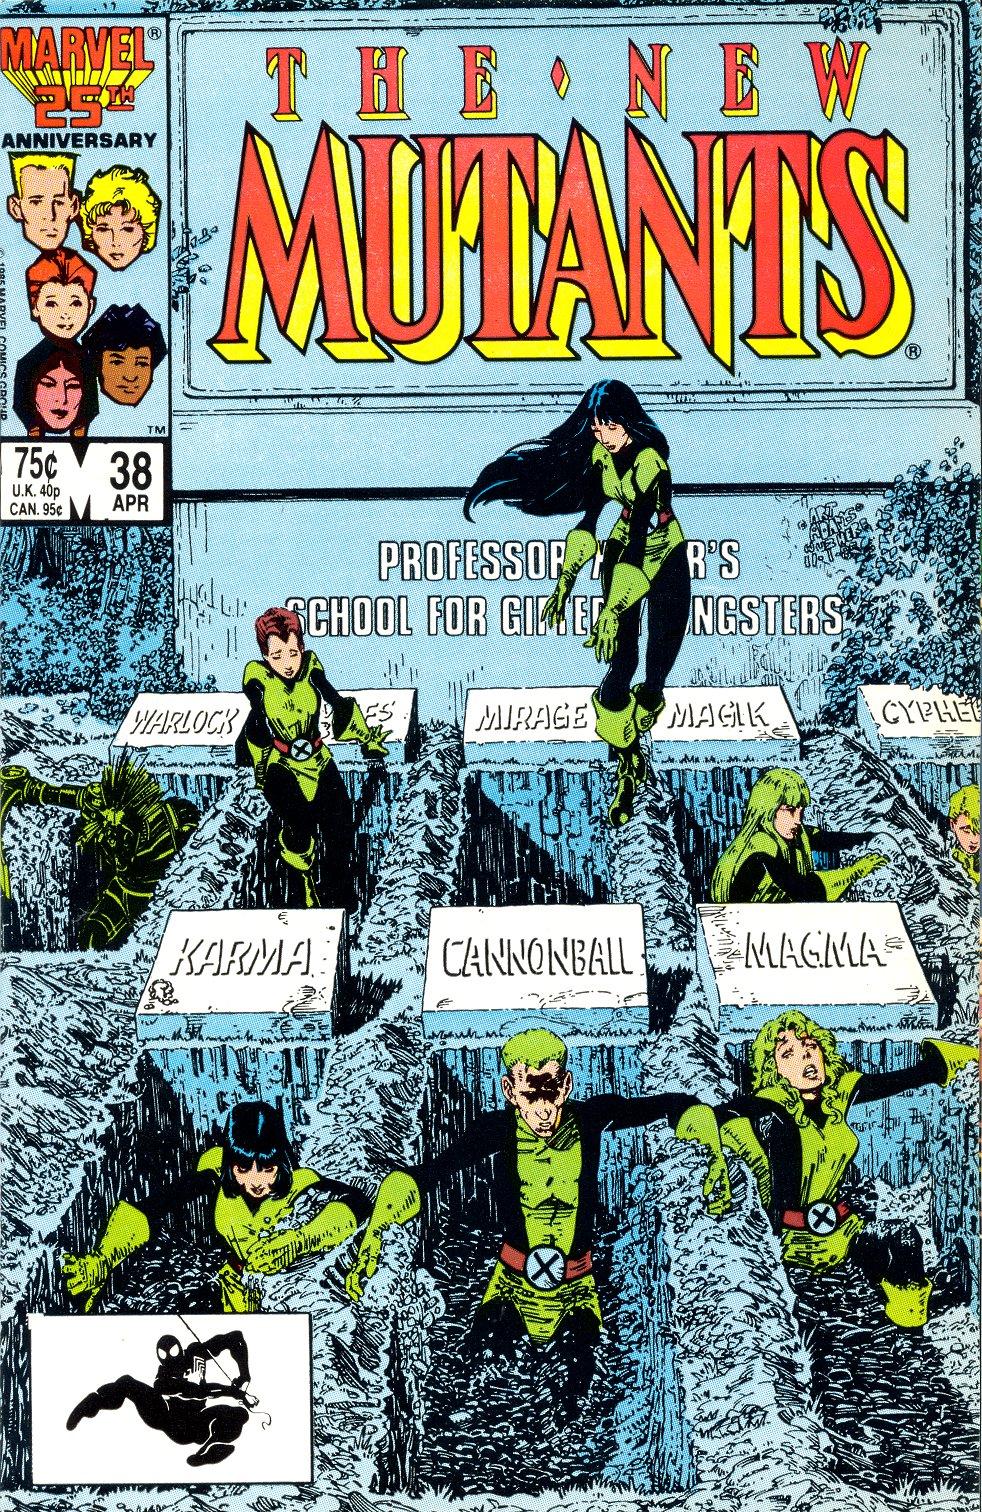 The New Mutants Vol. 1 #38